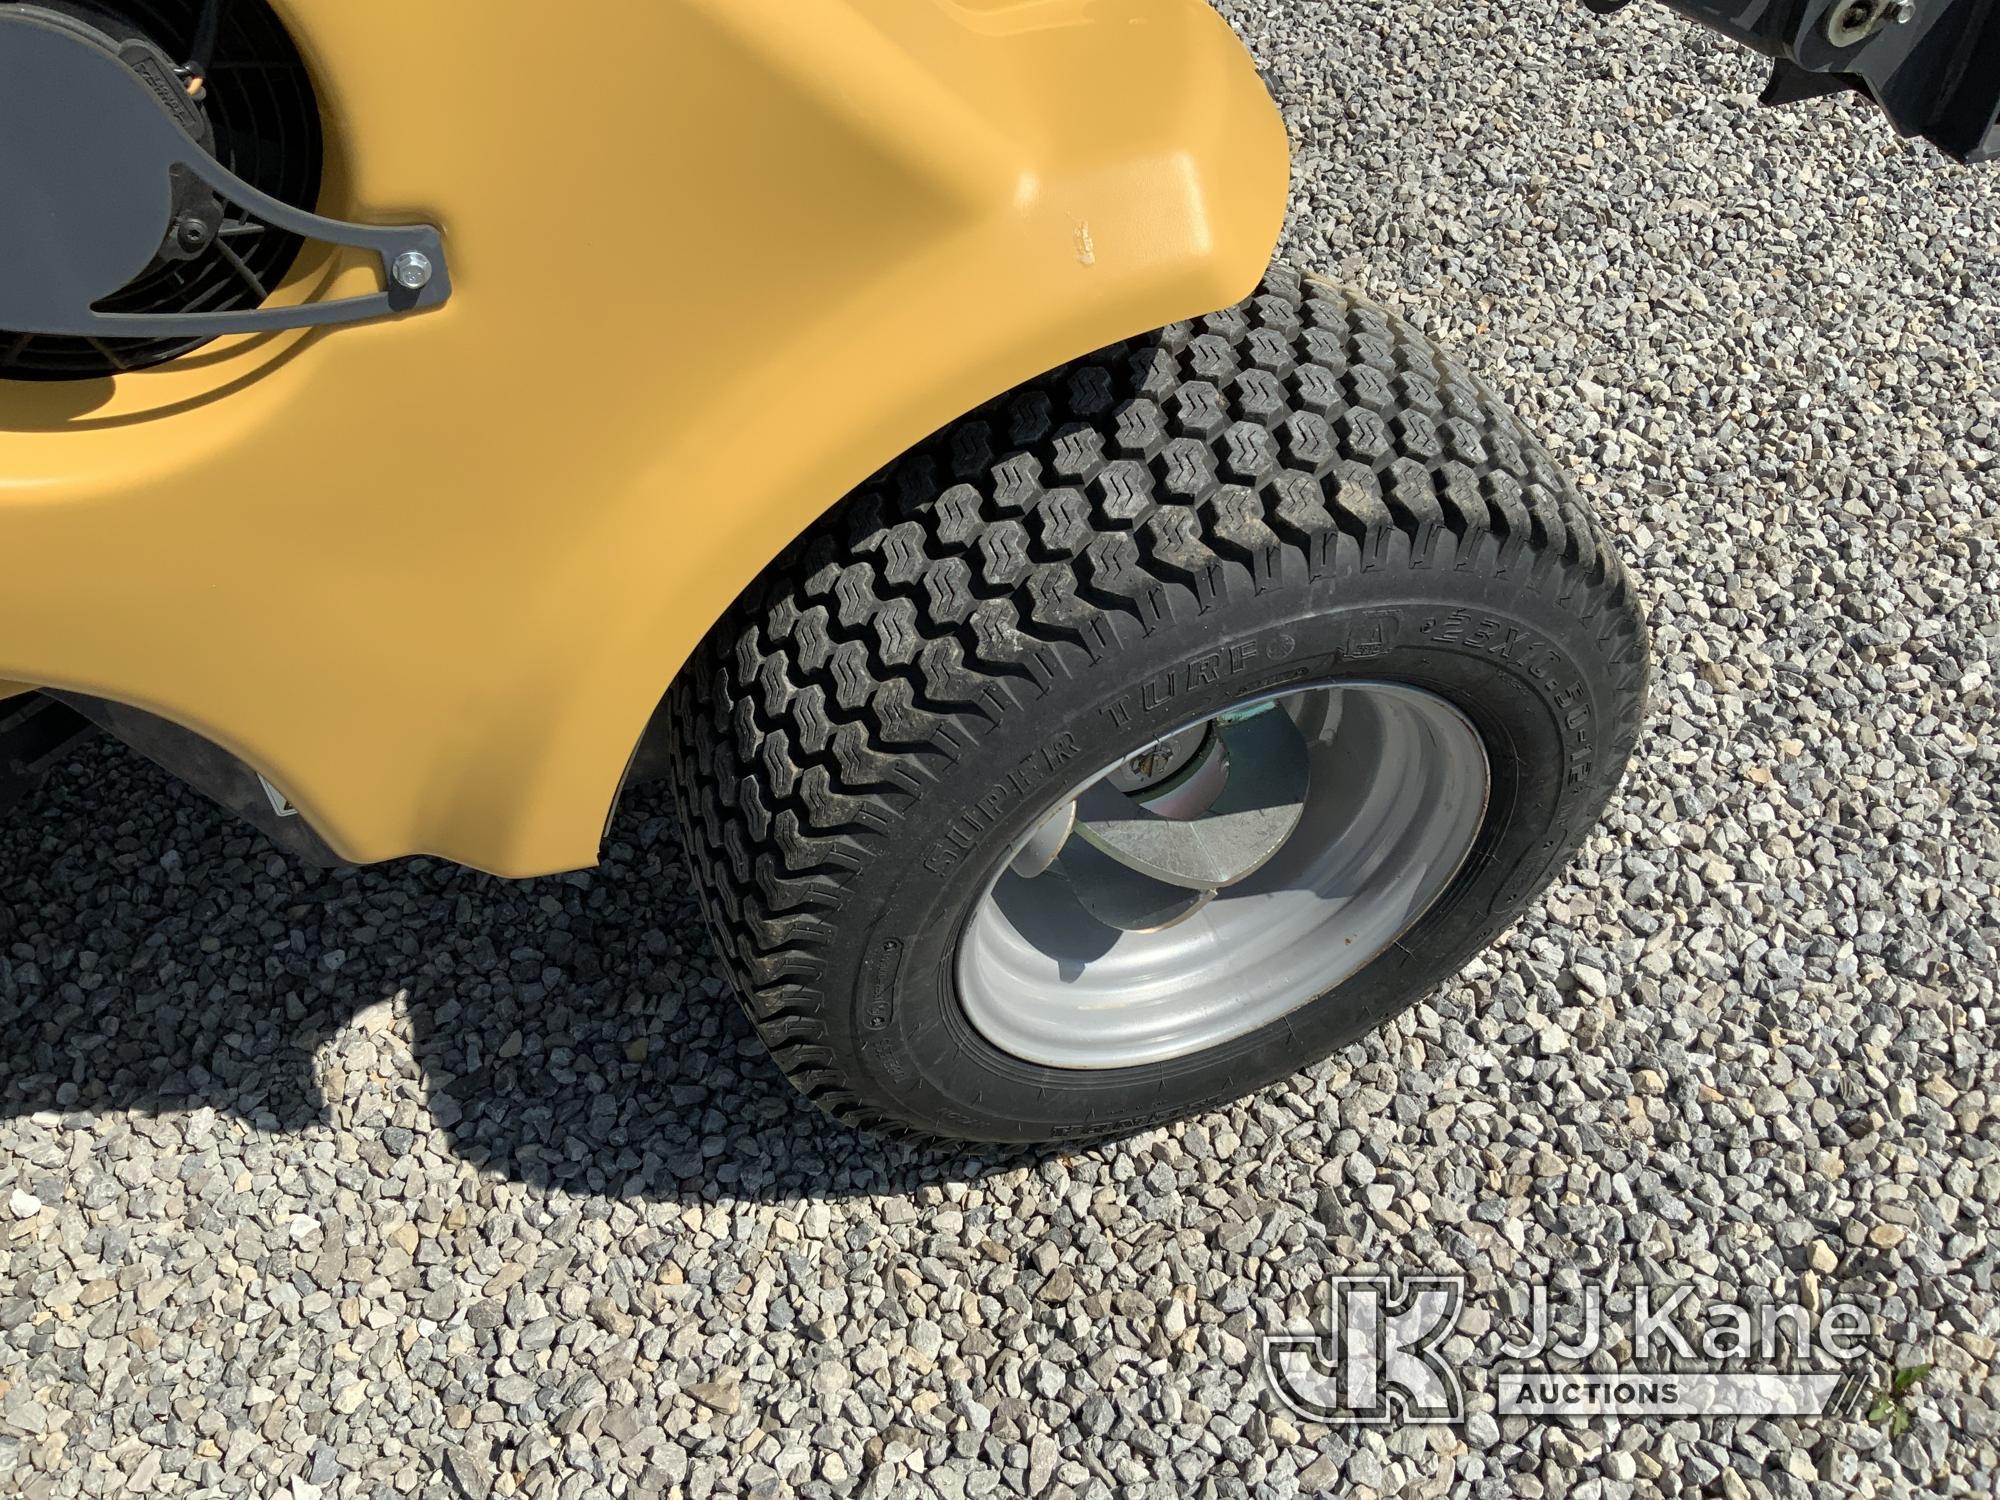 (Fort Wayne, IN) 2020 Vermeer ATX530 Articulating Wheel Loader Runs, Moves & Operates